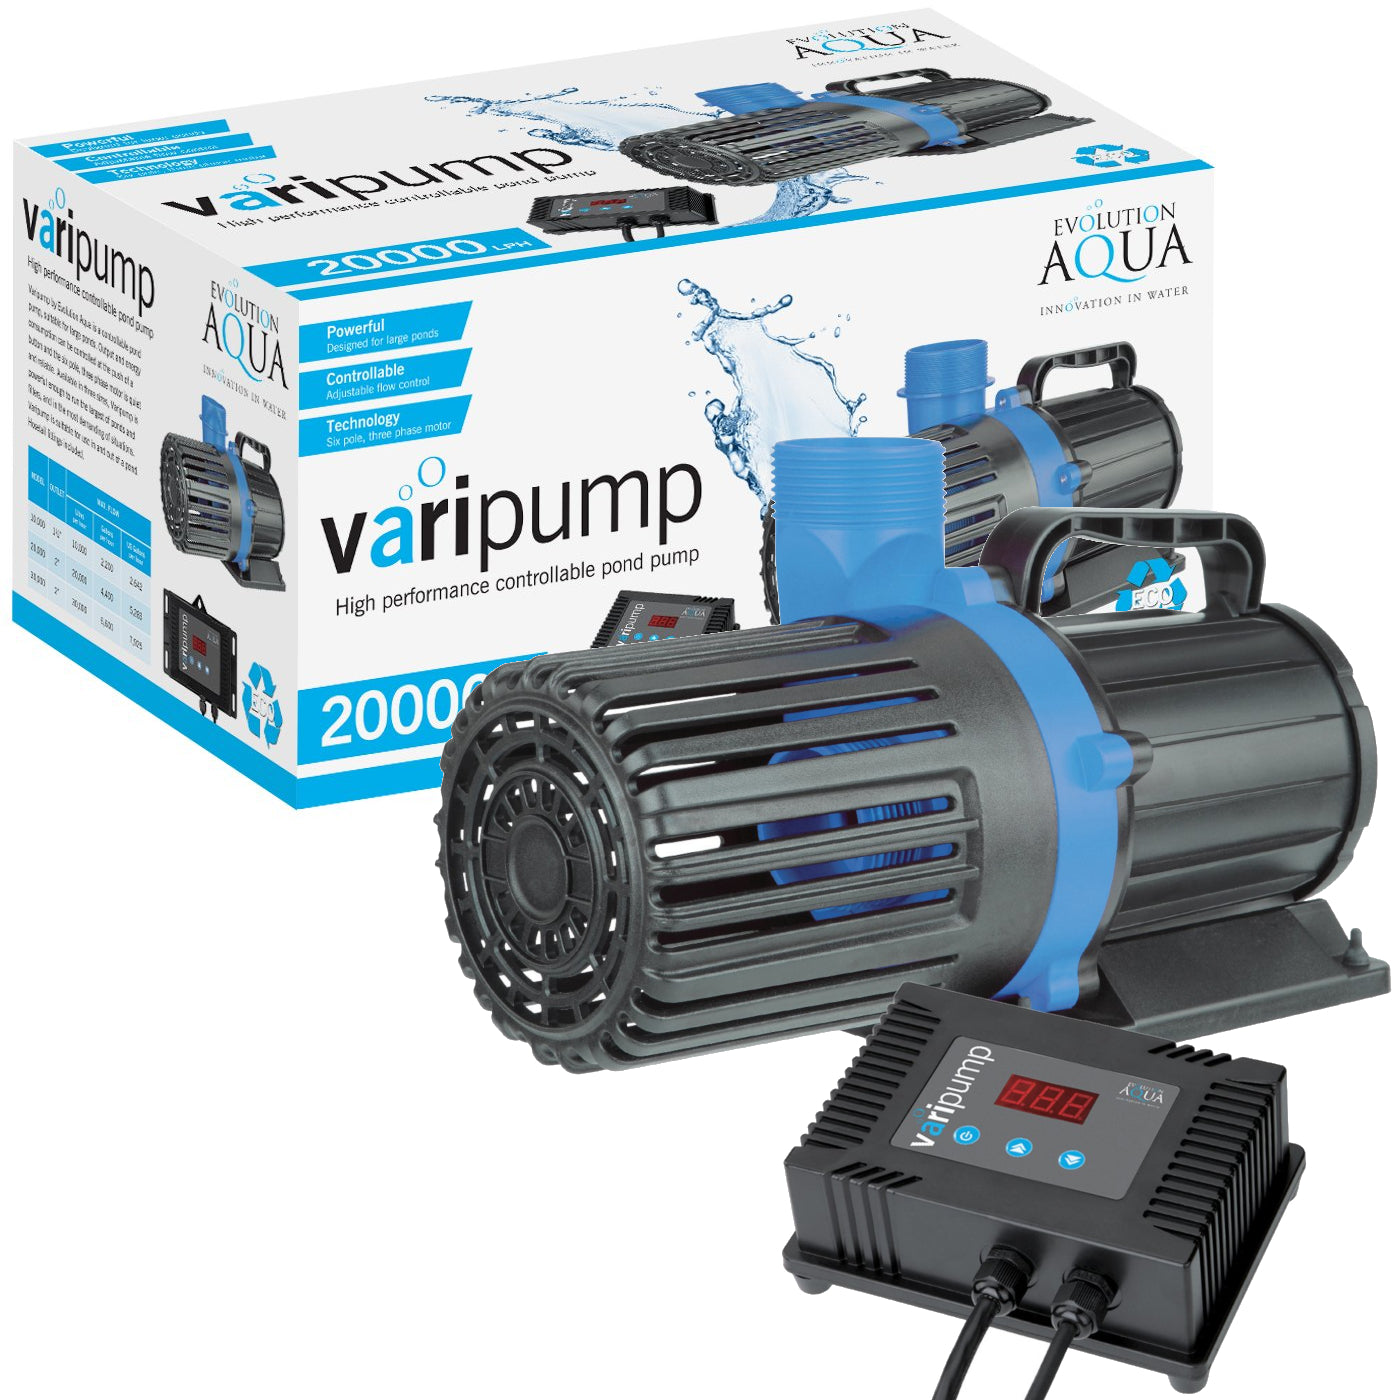 Evolution Aqua Varipump Variable Flow Pond Pump 20000L/h